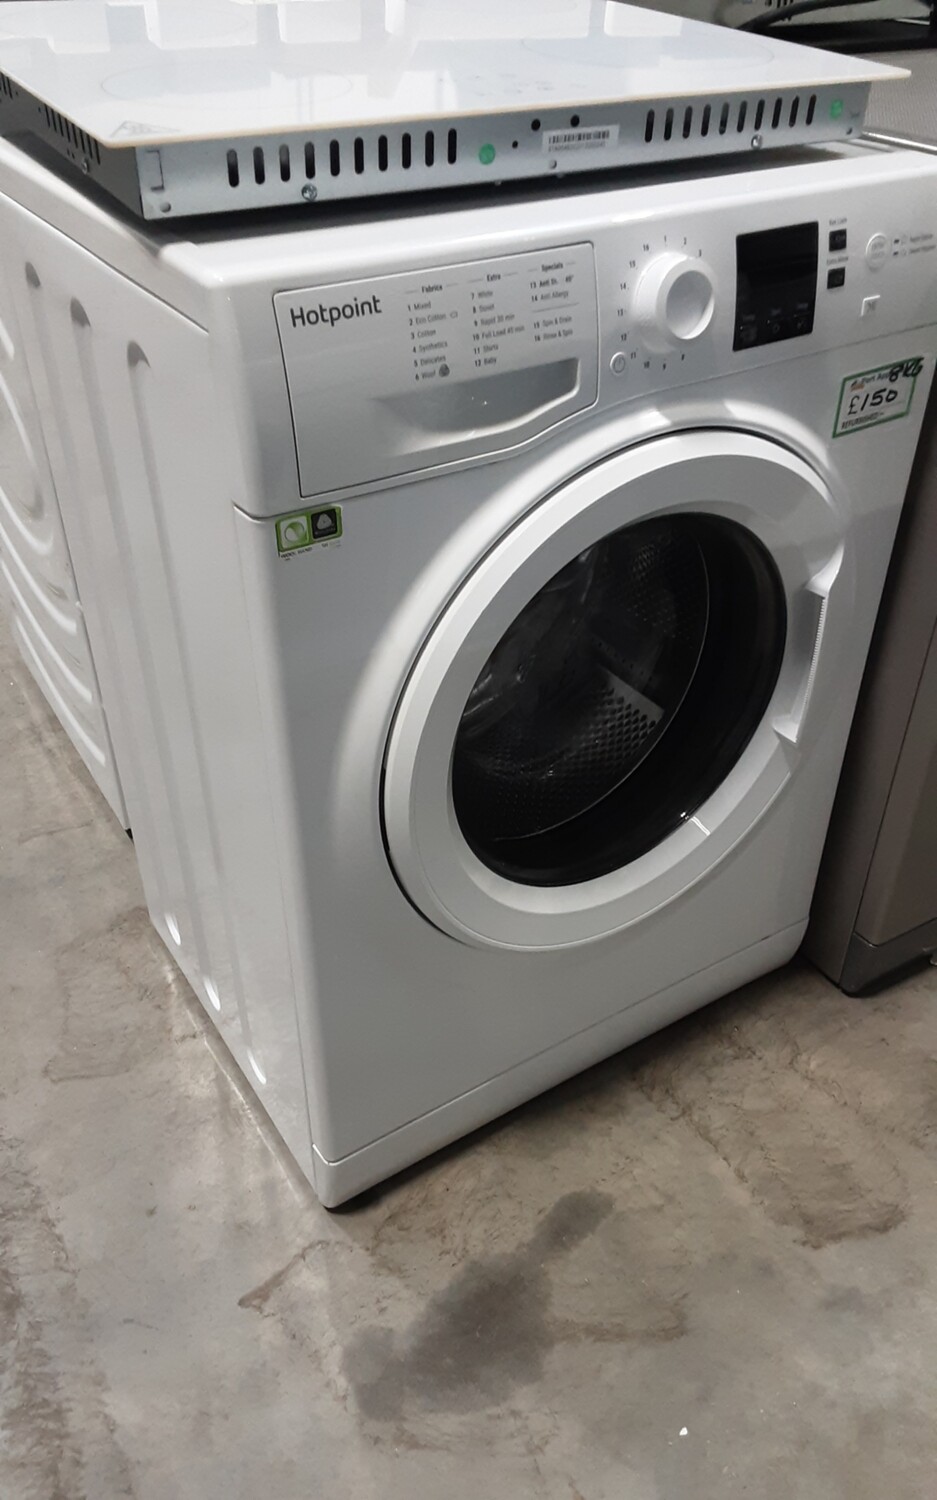 Hotpoint 8kg Load 1400 Spin Washing Machine - White - Refurbished - 6 Month Guarantee